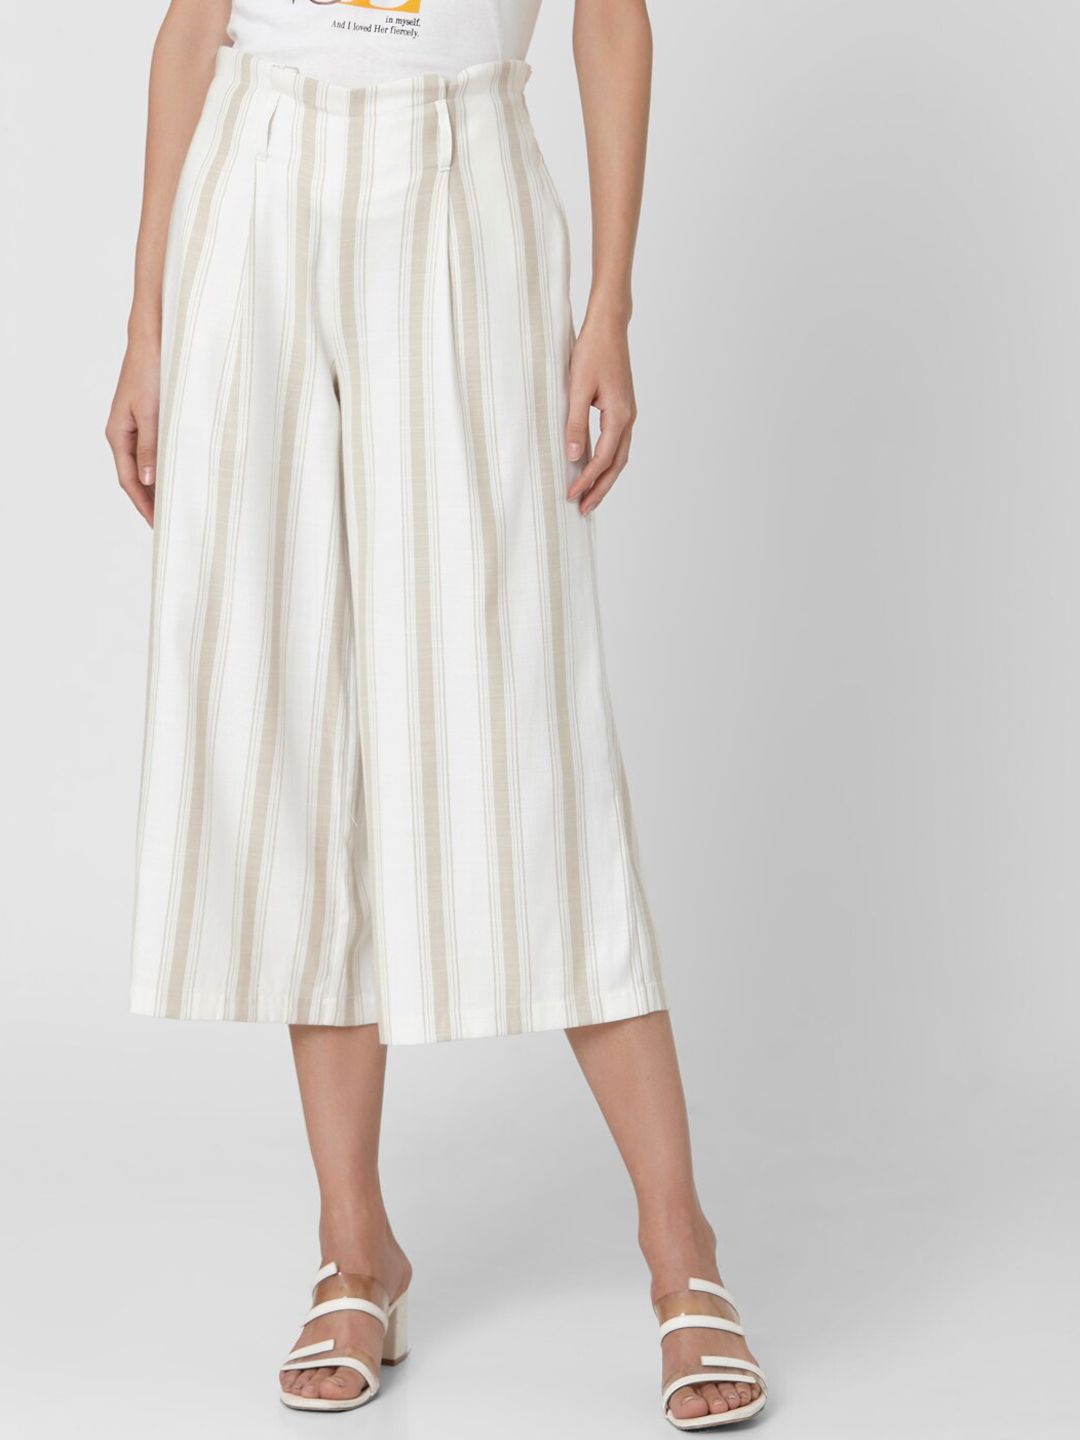 Vero Moda Women Beige & White Regular Fit Striped Culottes Price in India